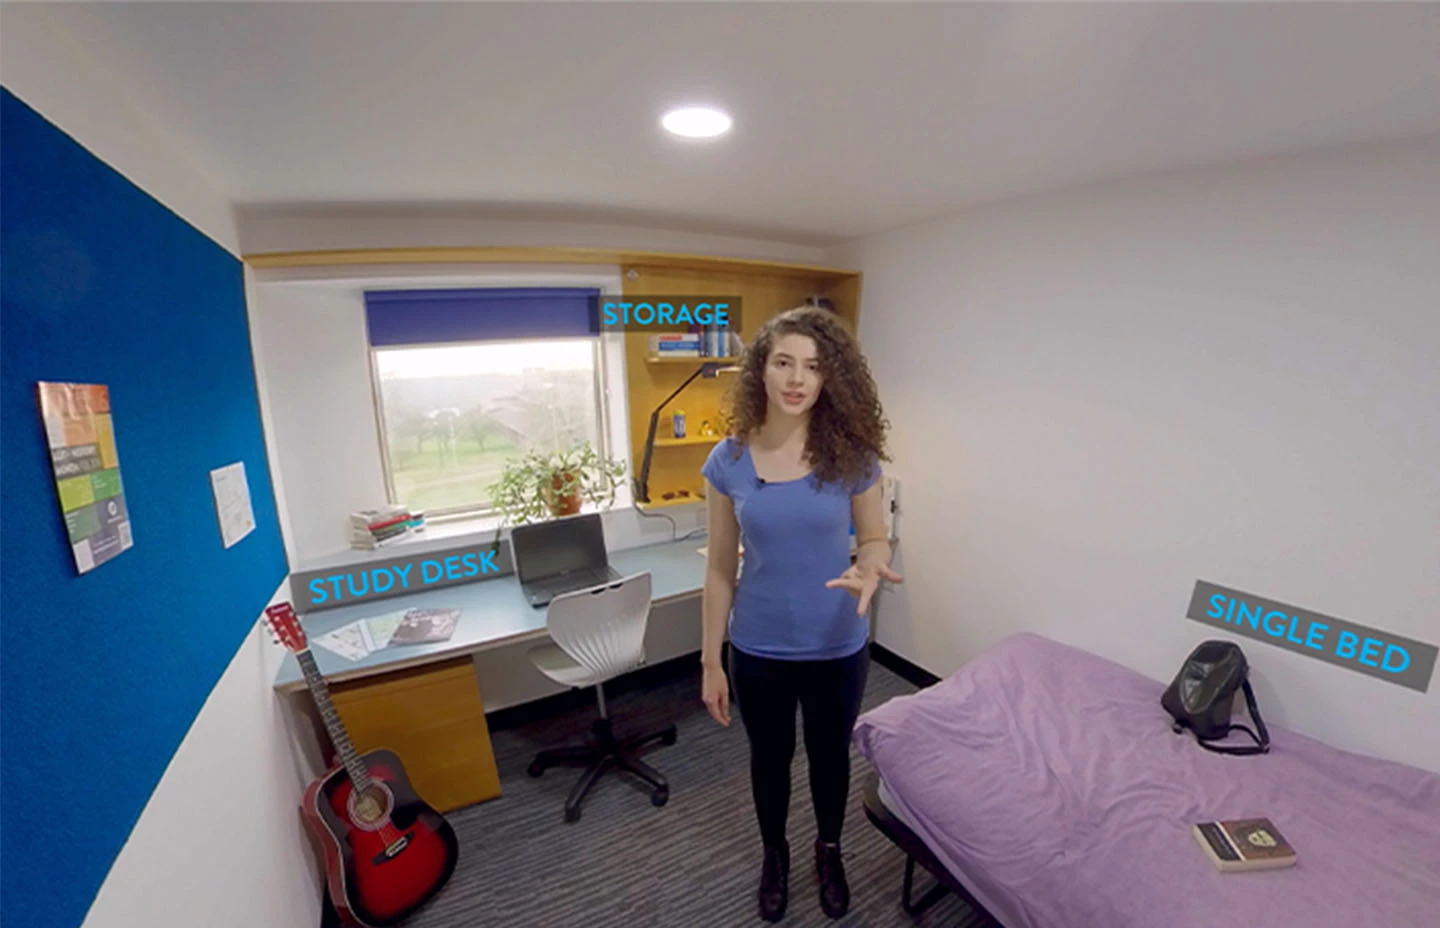 Student standing in student accommodation describing room amenities